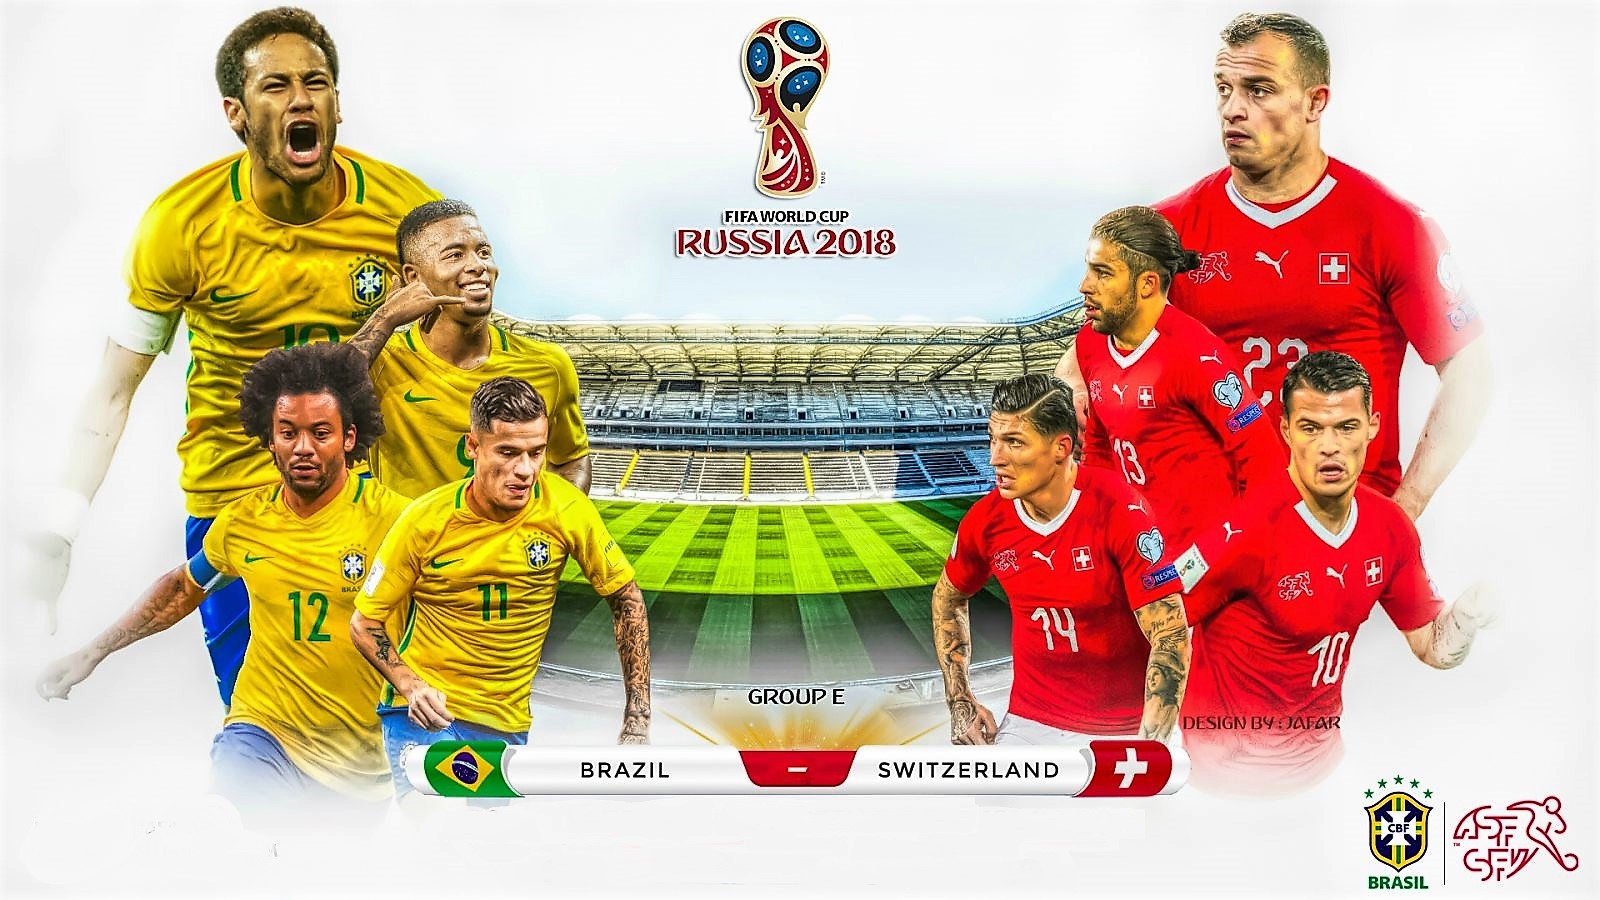 brazil_switzerland_world_cup_2018-1600x900.jpg